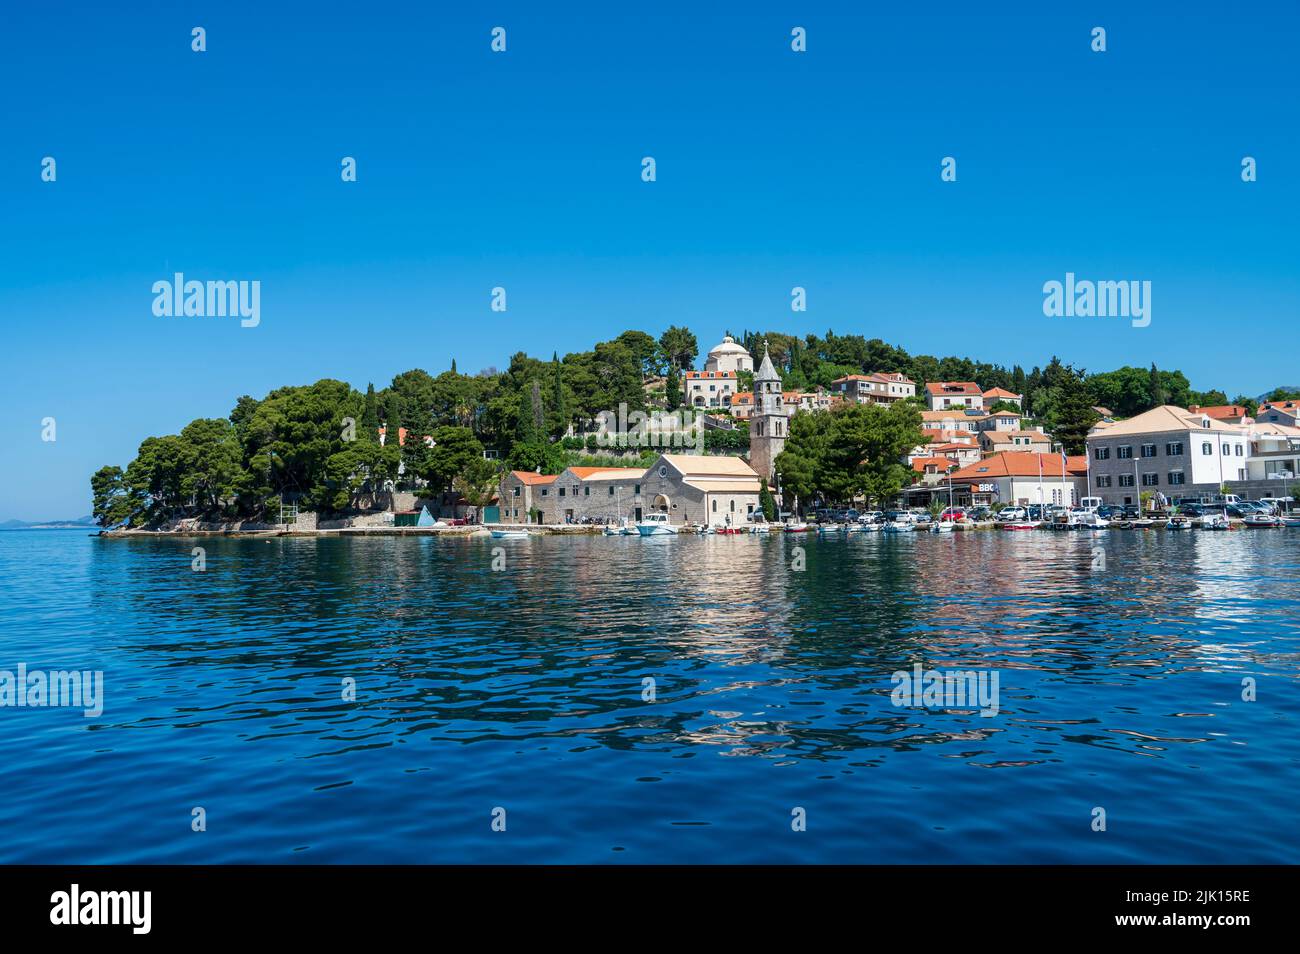 View of Cavtat from the Adriatic Sea, Cavtat, Dubrovnik Riviera, Croatia, Europe Stock Photo